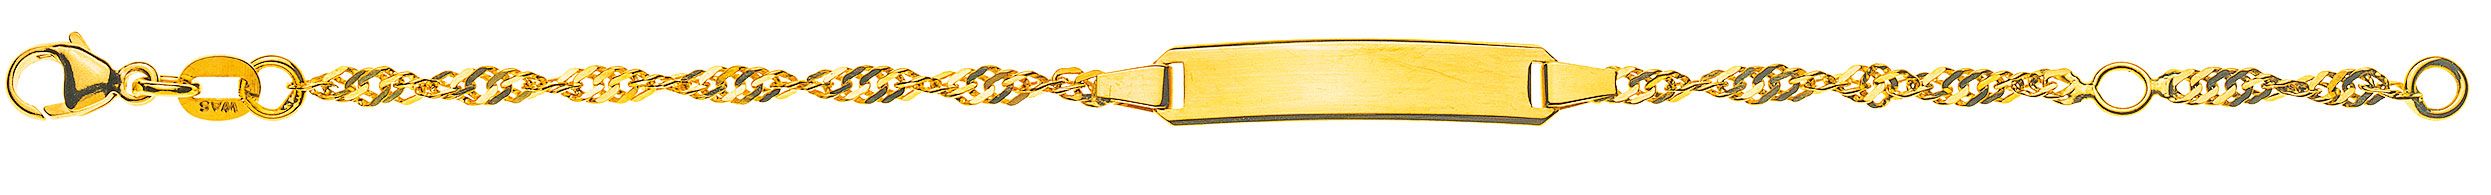 AURONOS Prestige ID bracelet 18k yellow gold Singapore chain 18cm